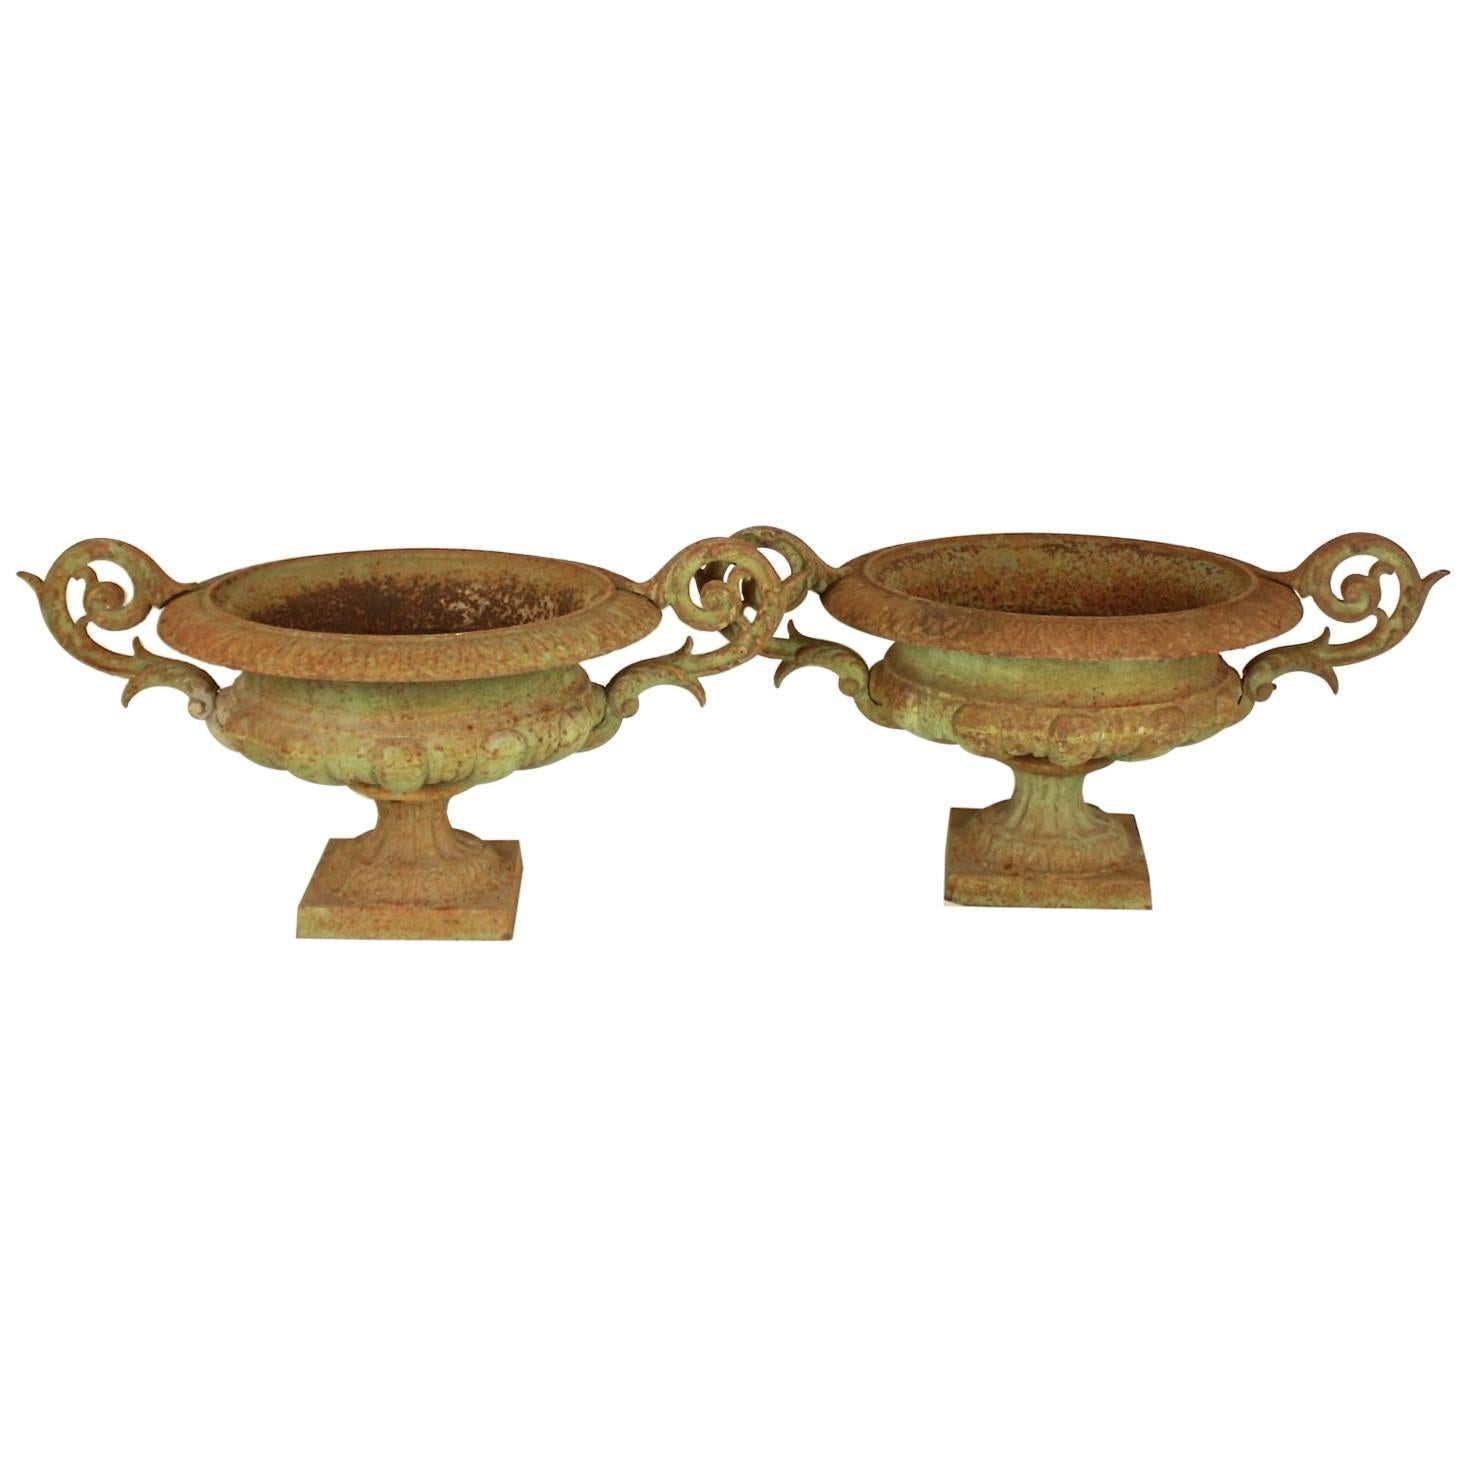 Pair of 19th Century Cast Iron Urns or Jardinieres